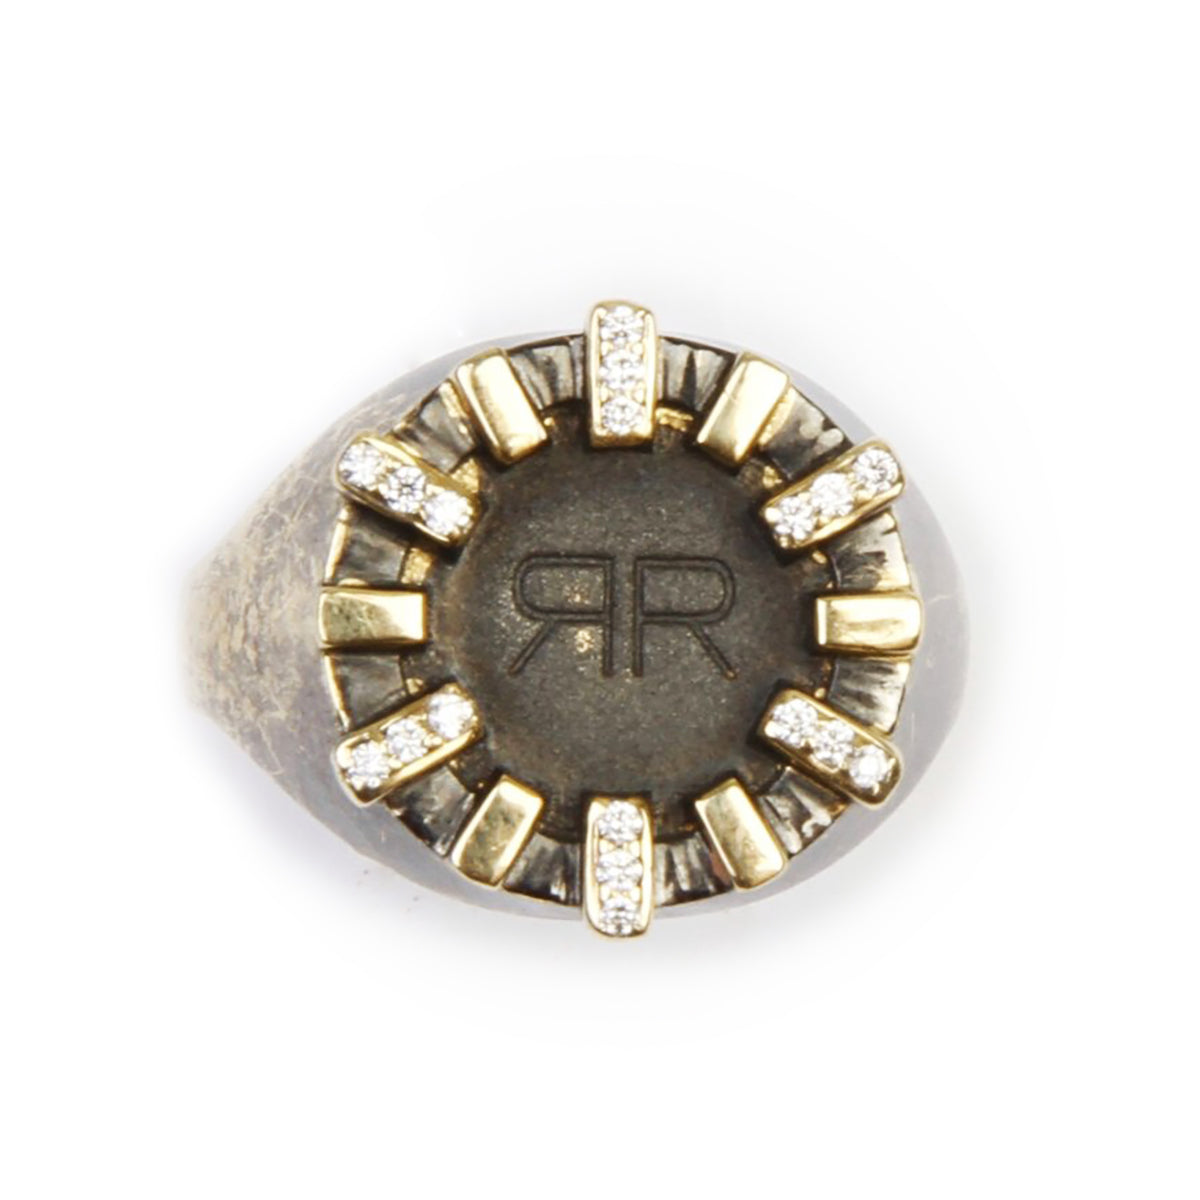 Black signet ring with diamonds